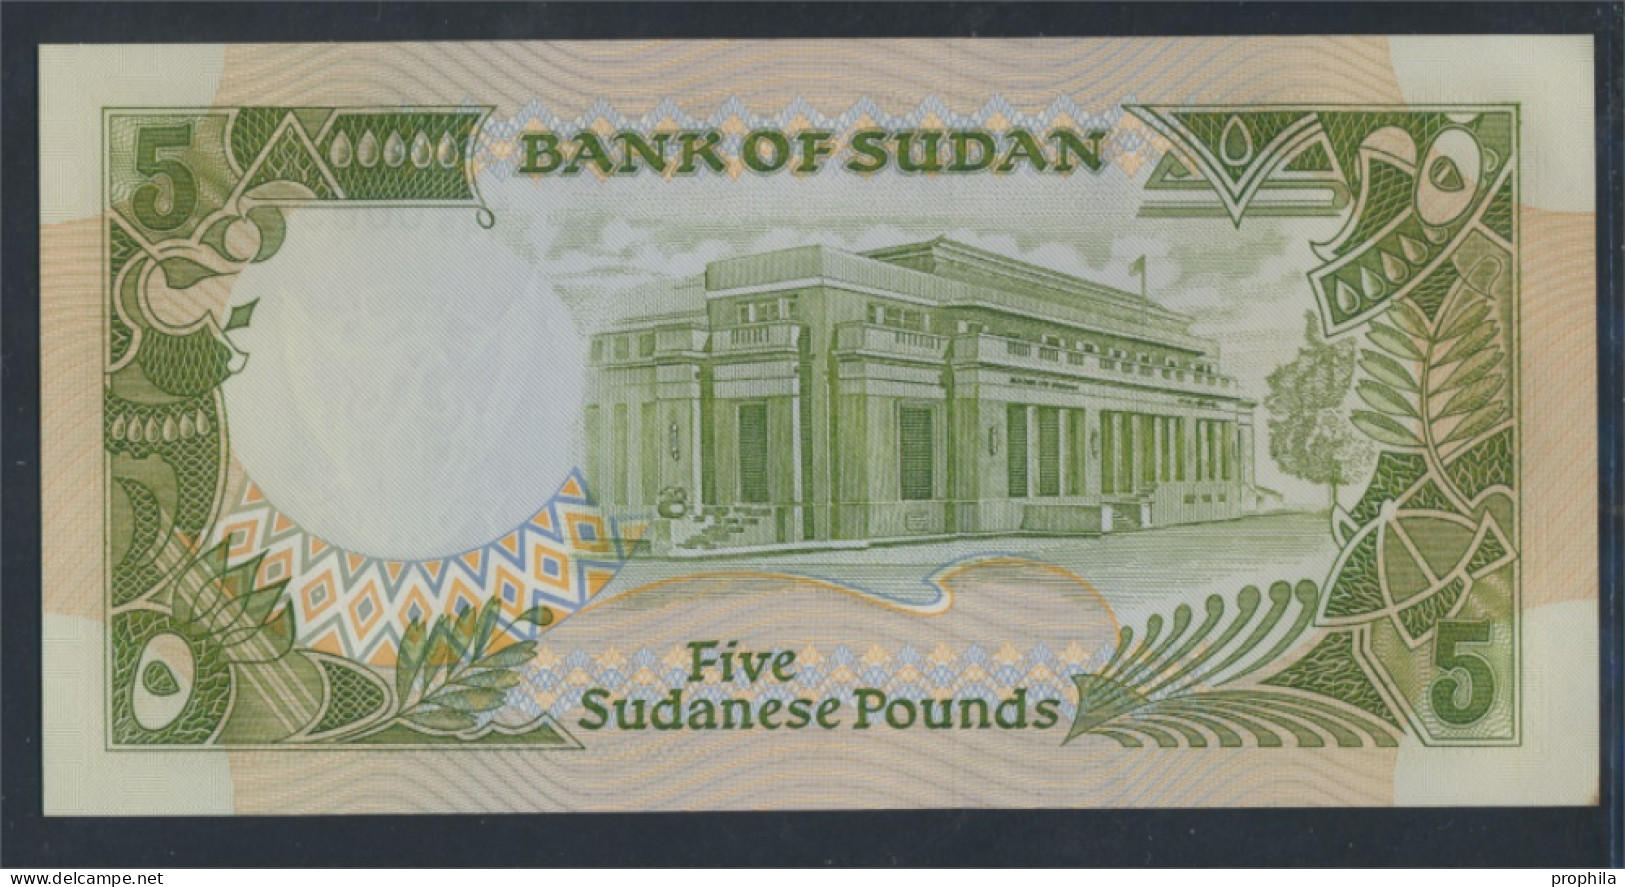 Sudan Pick-Nr: 40c Bankfrisch 1990 5 Pounds (9855658 - Sudan